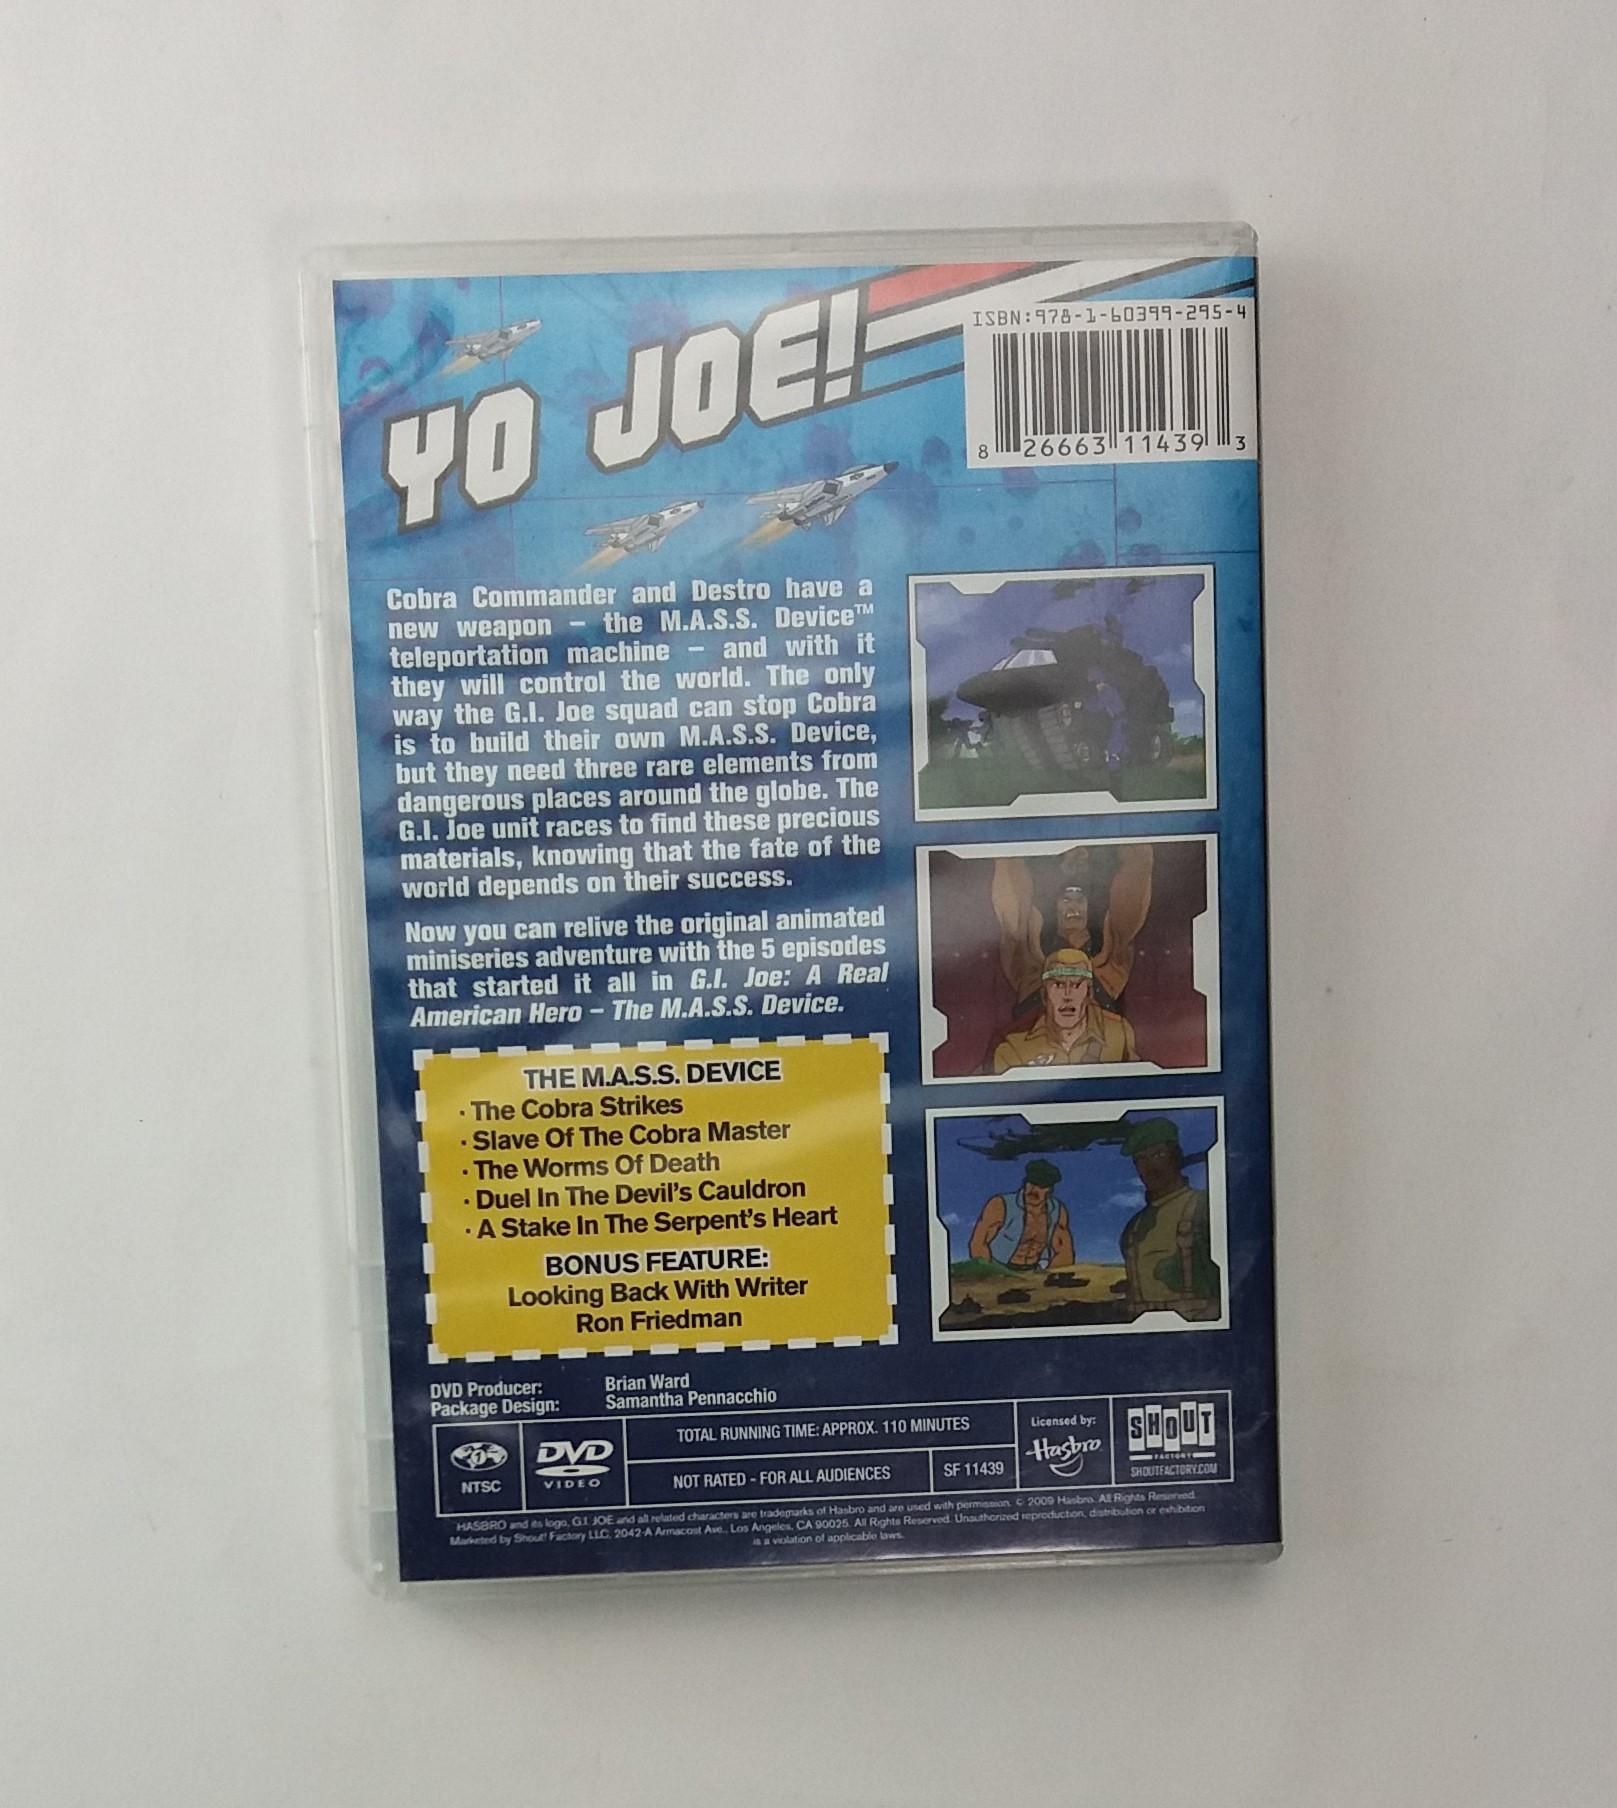 GI Joe "The M.A.S.S. Device" Cartoon DVD